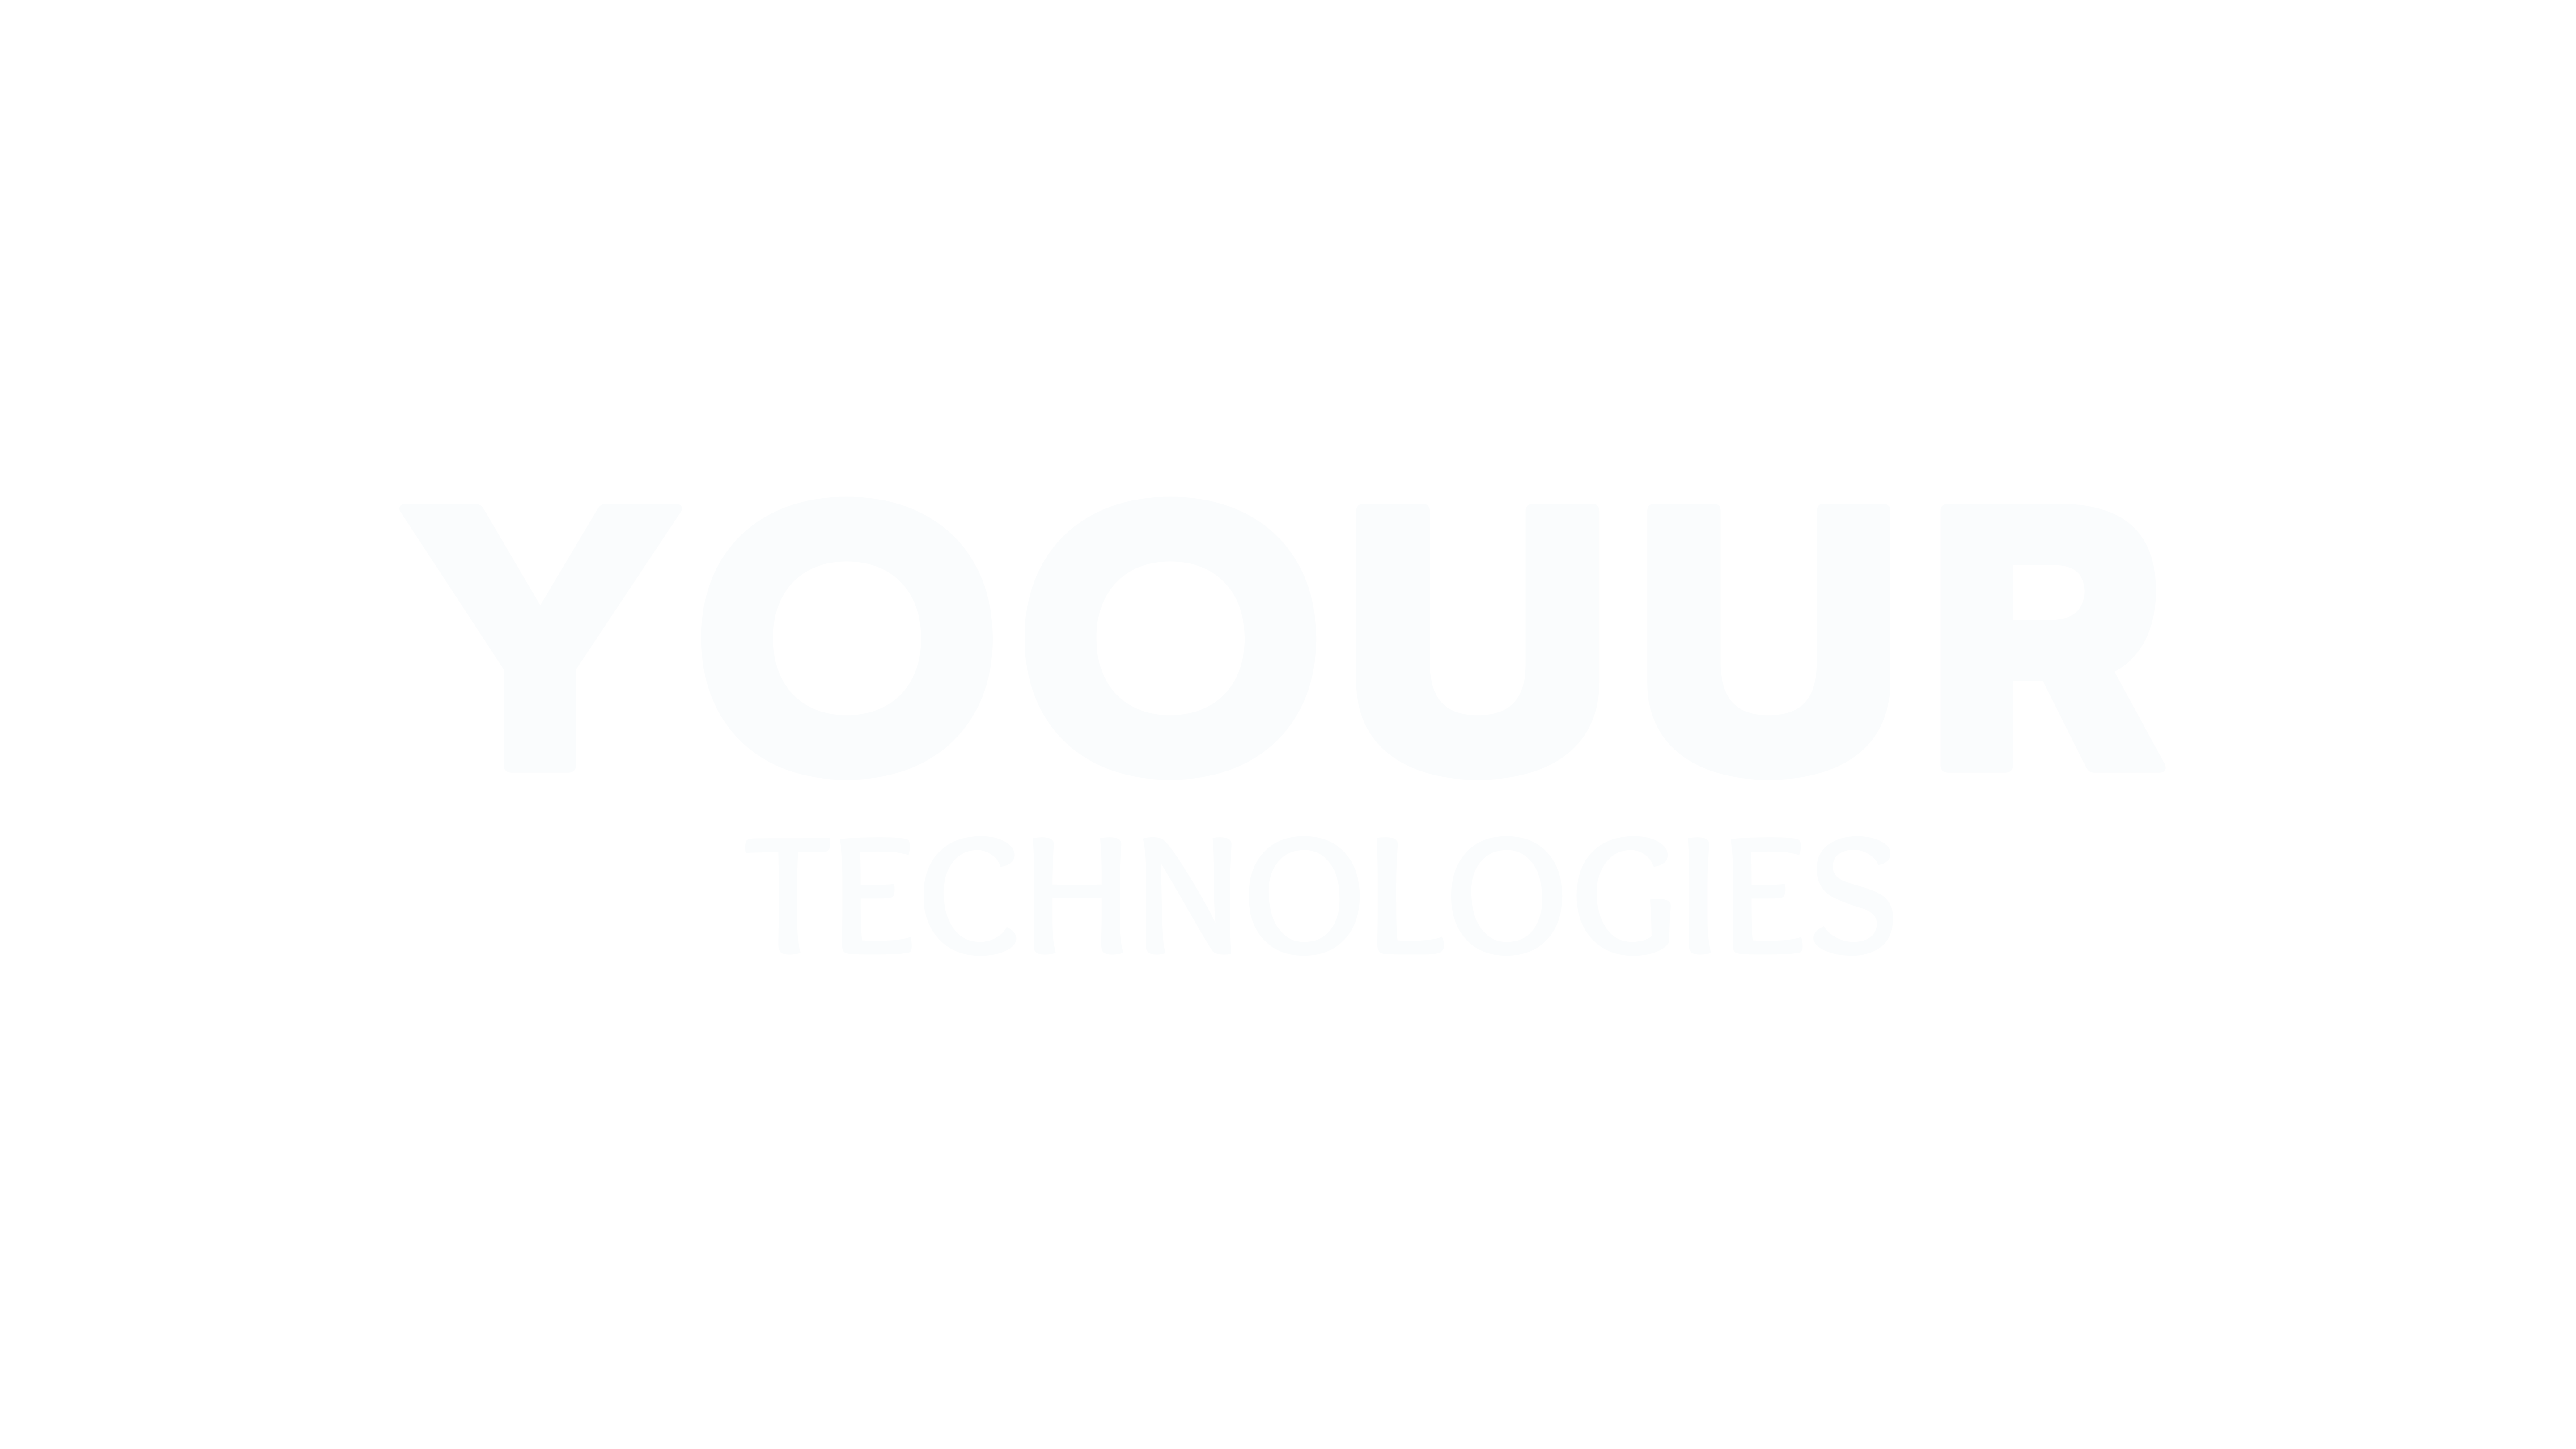 yoouur technologies